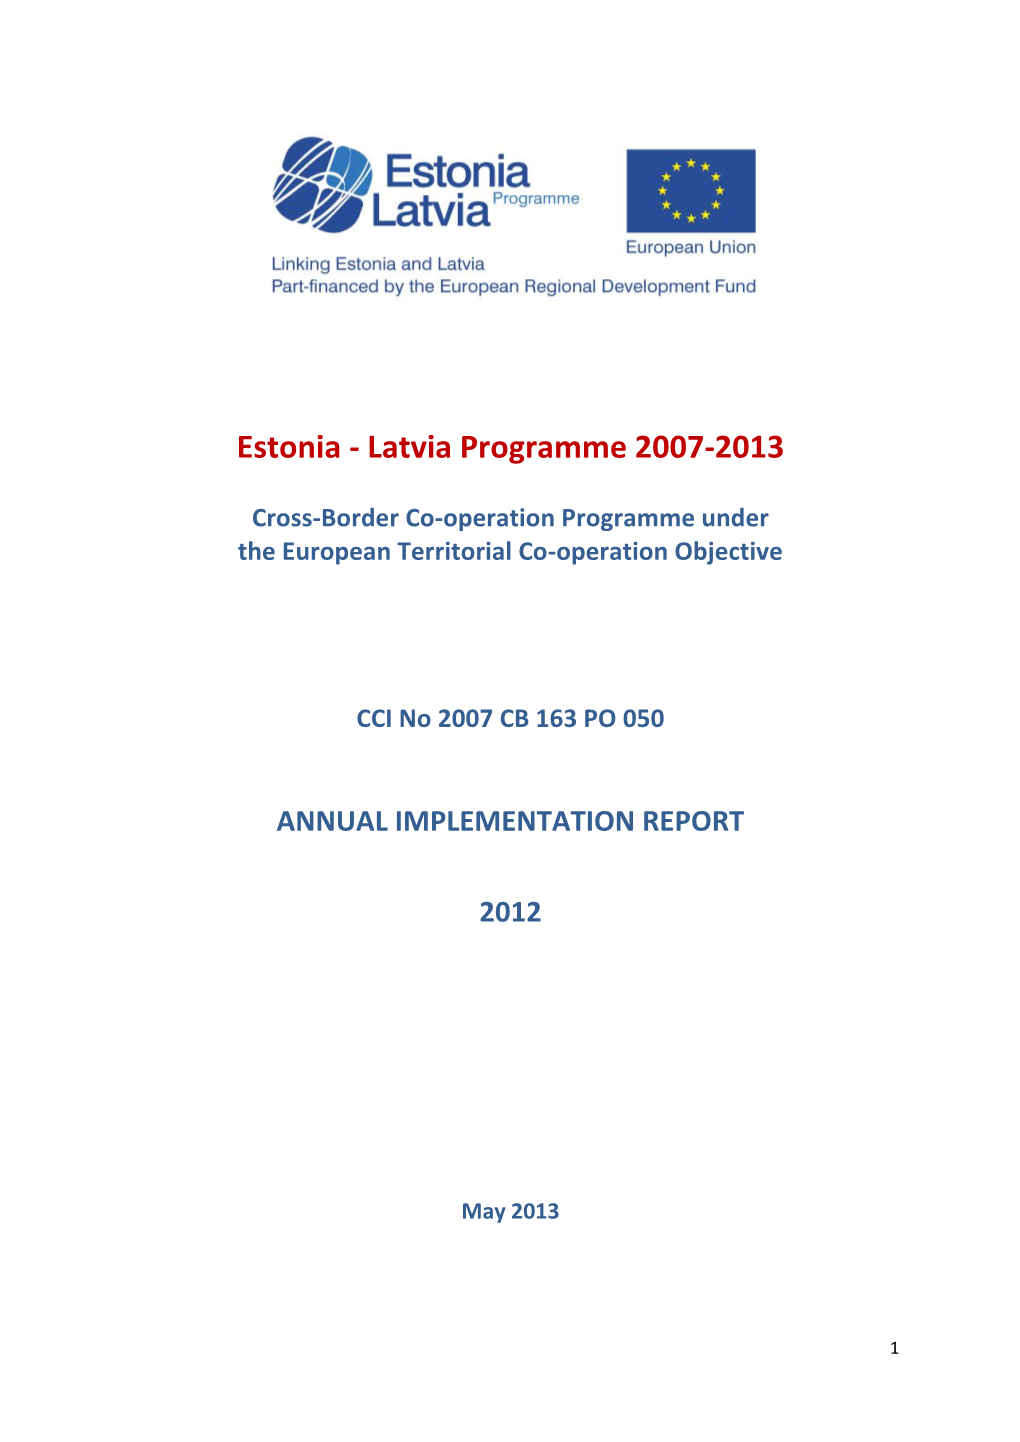 Estonia - Latvia Programme 2007-2013